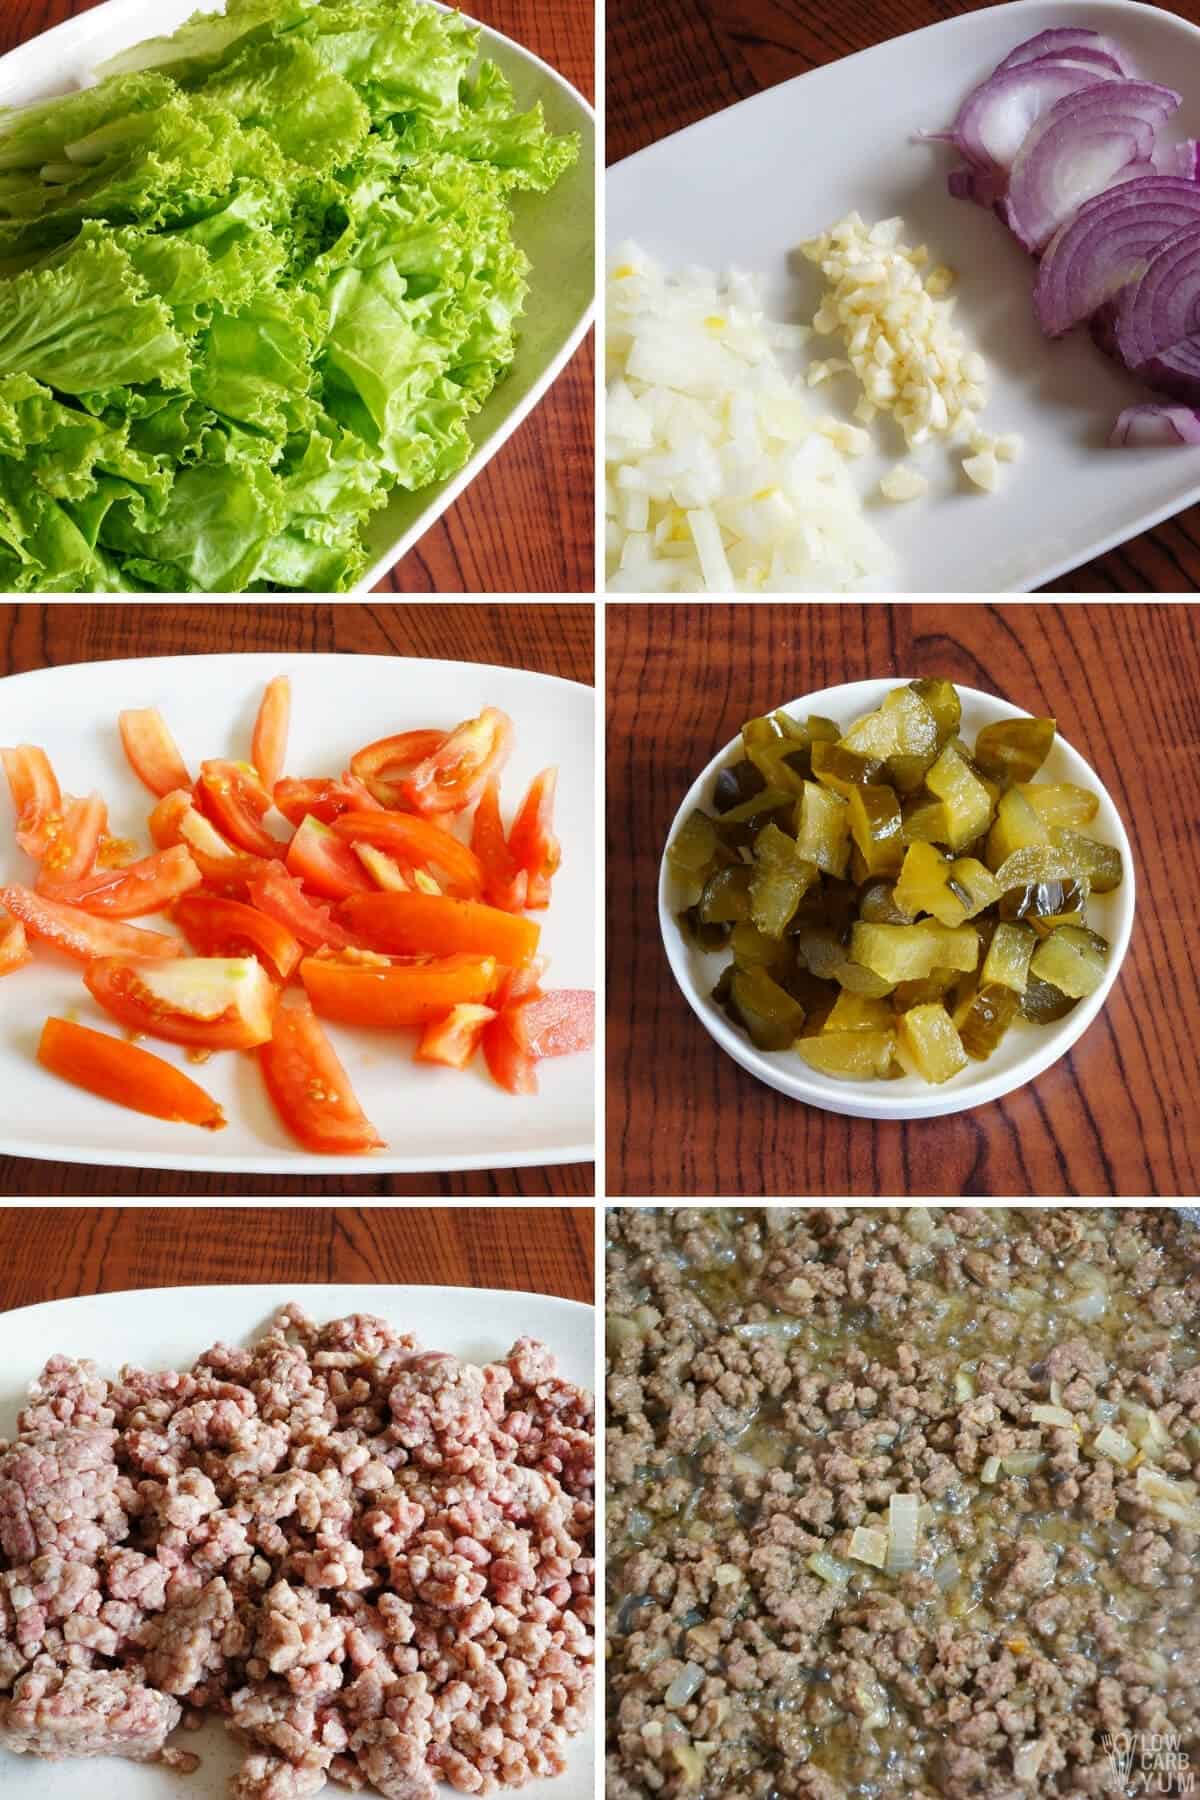 assembling ingredients for salad